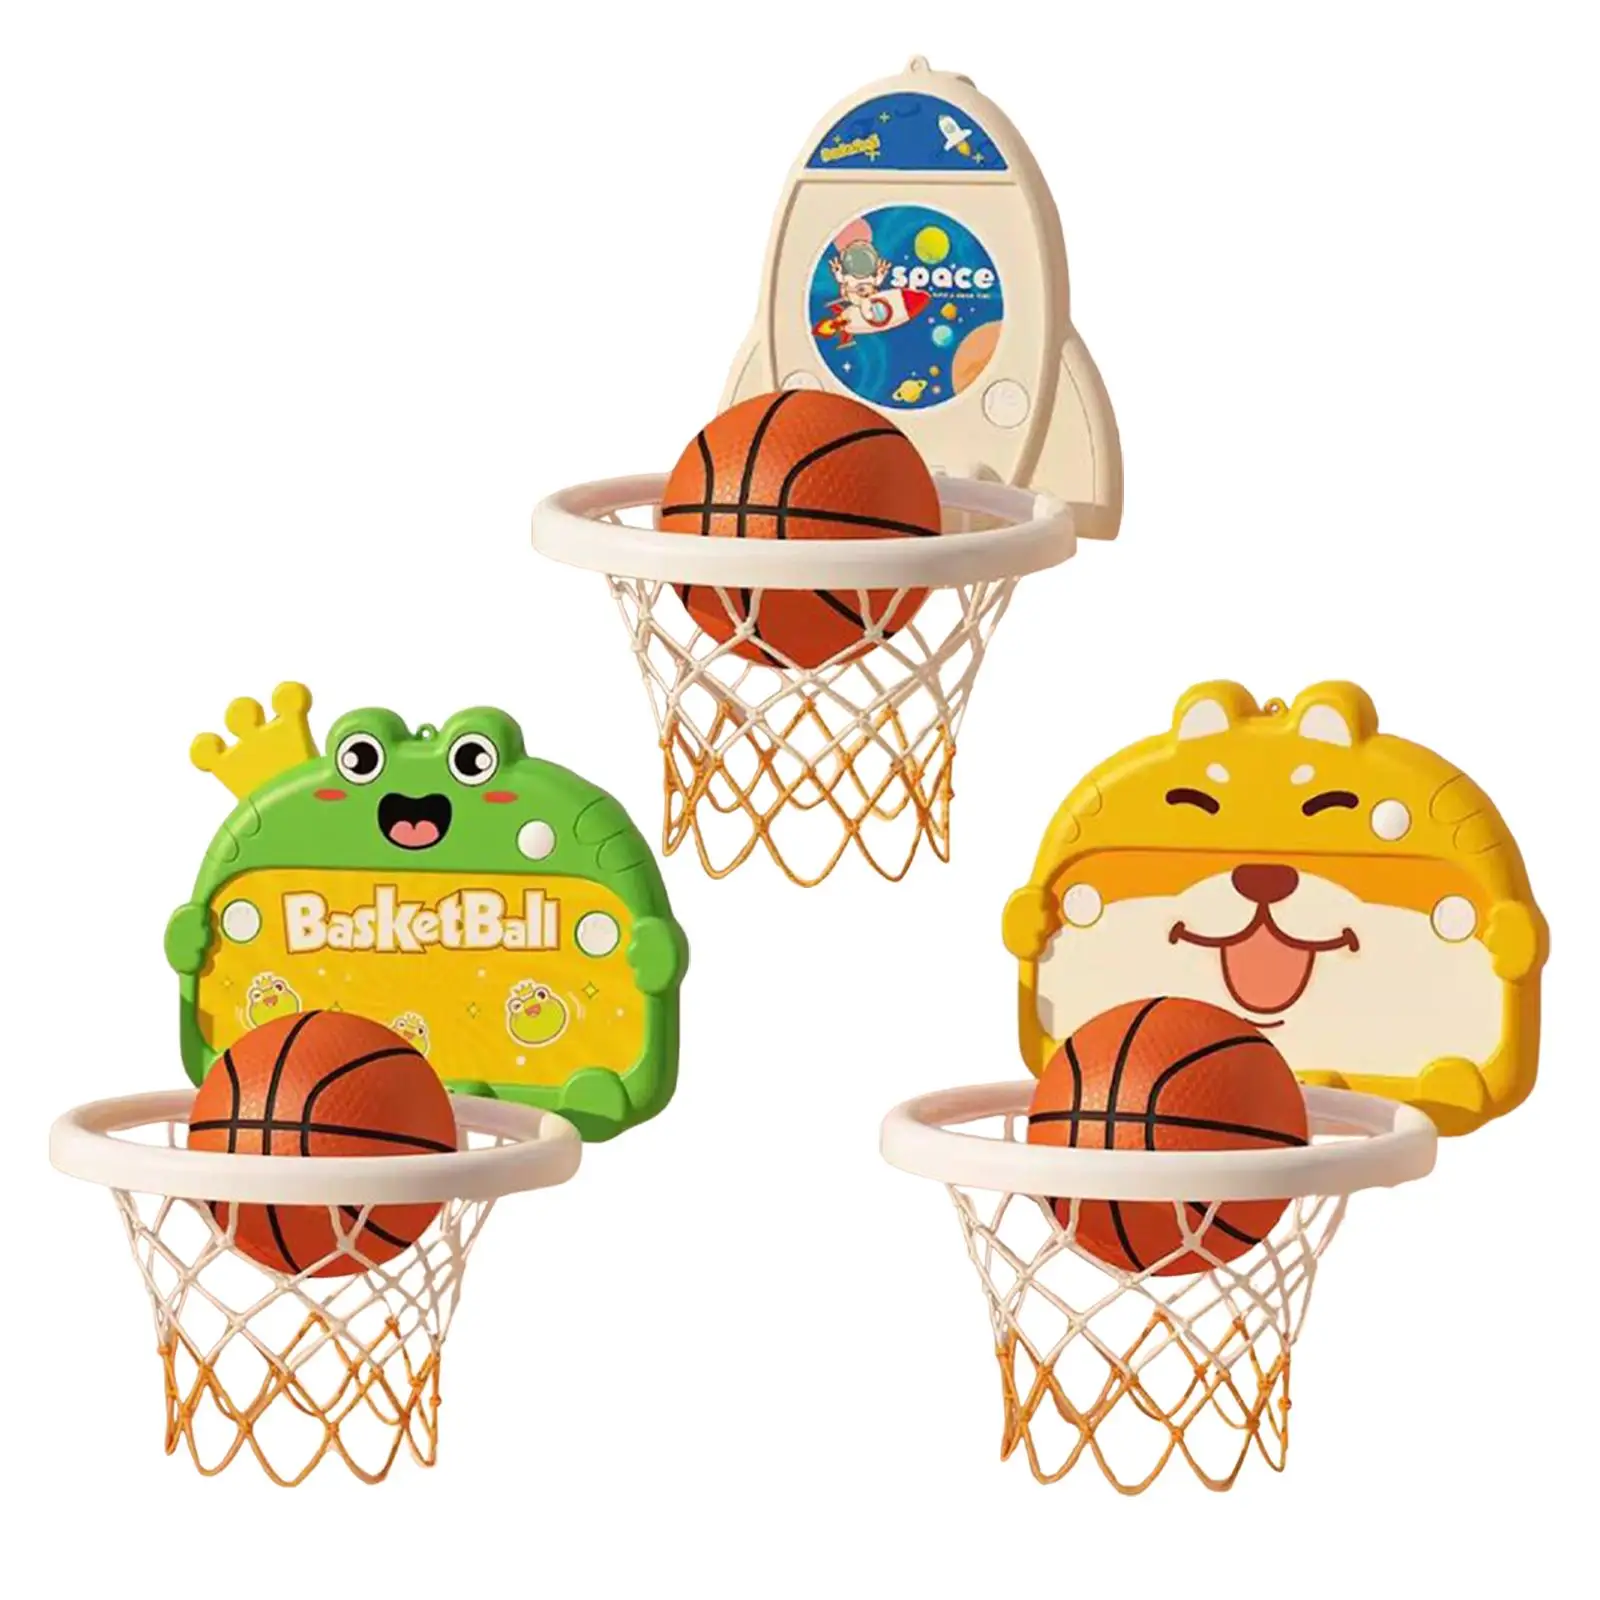 Mini Basketball Hoop Set Portable Interactive Wall Basketball Board Family Games for Living Room Indoor Door Bedroom Wall